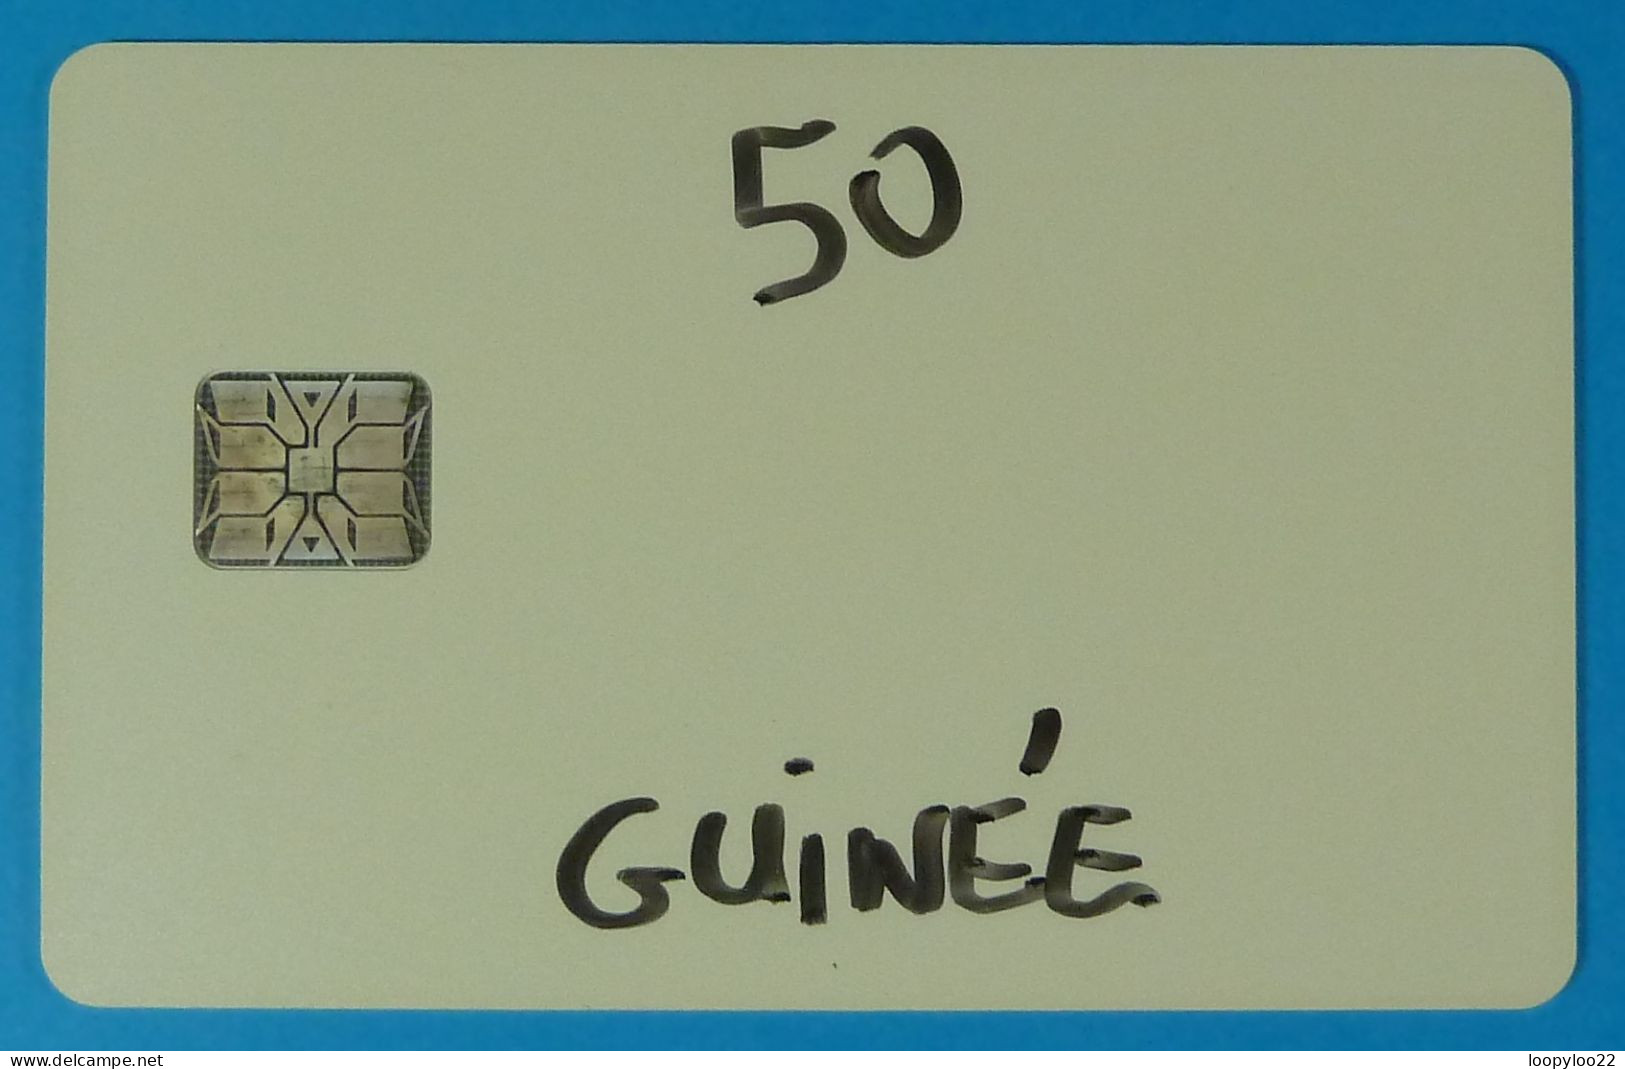 EQUATORIAL GUINEA - Shlumberger - Test / Demo - 50 Units - Mint - Equatoriaal Guinea